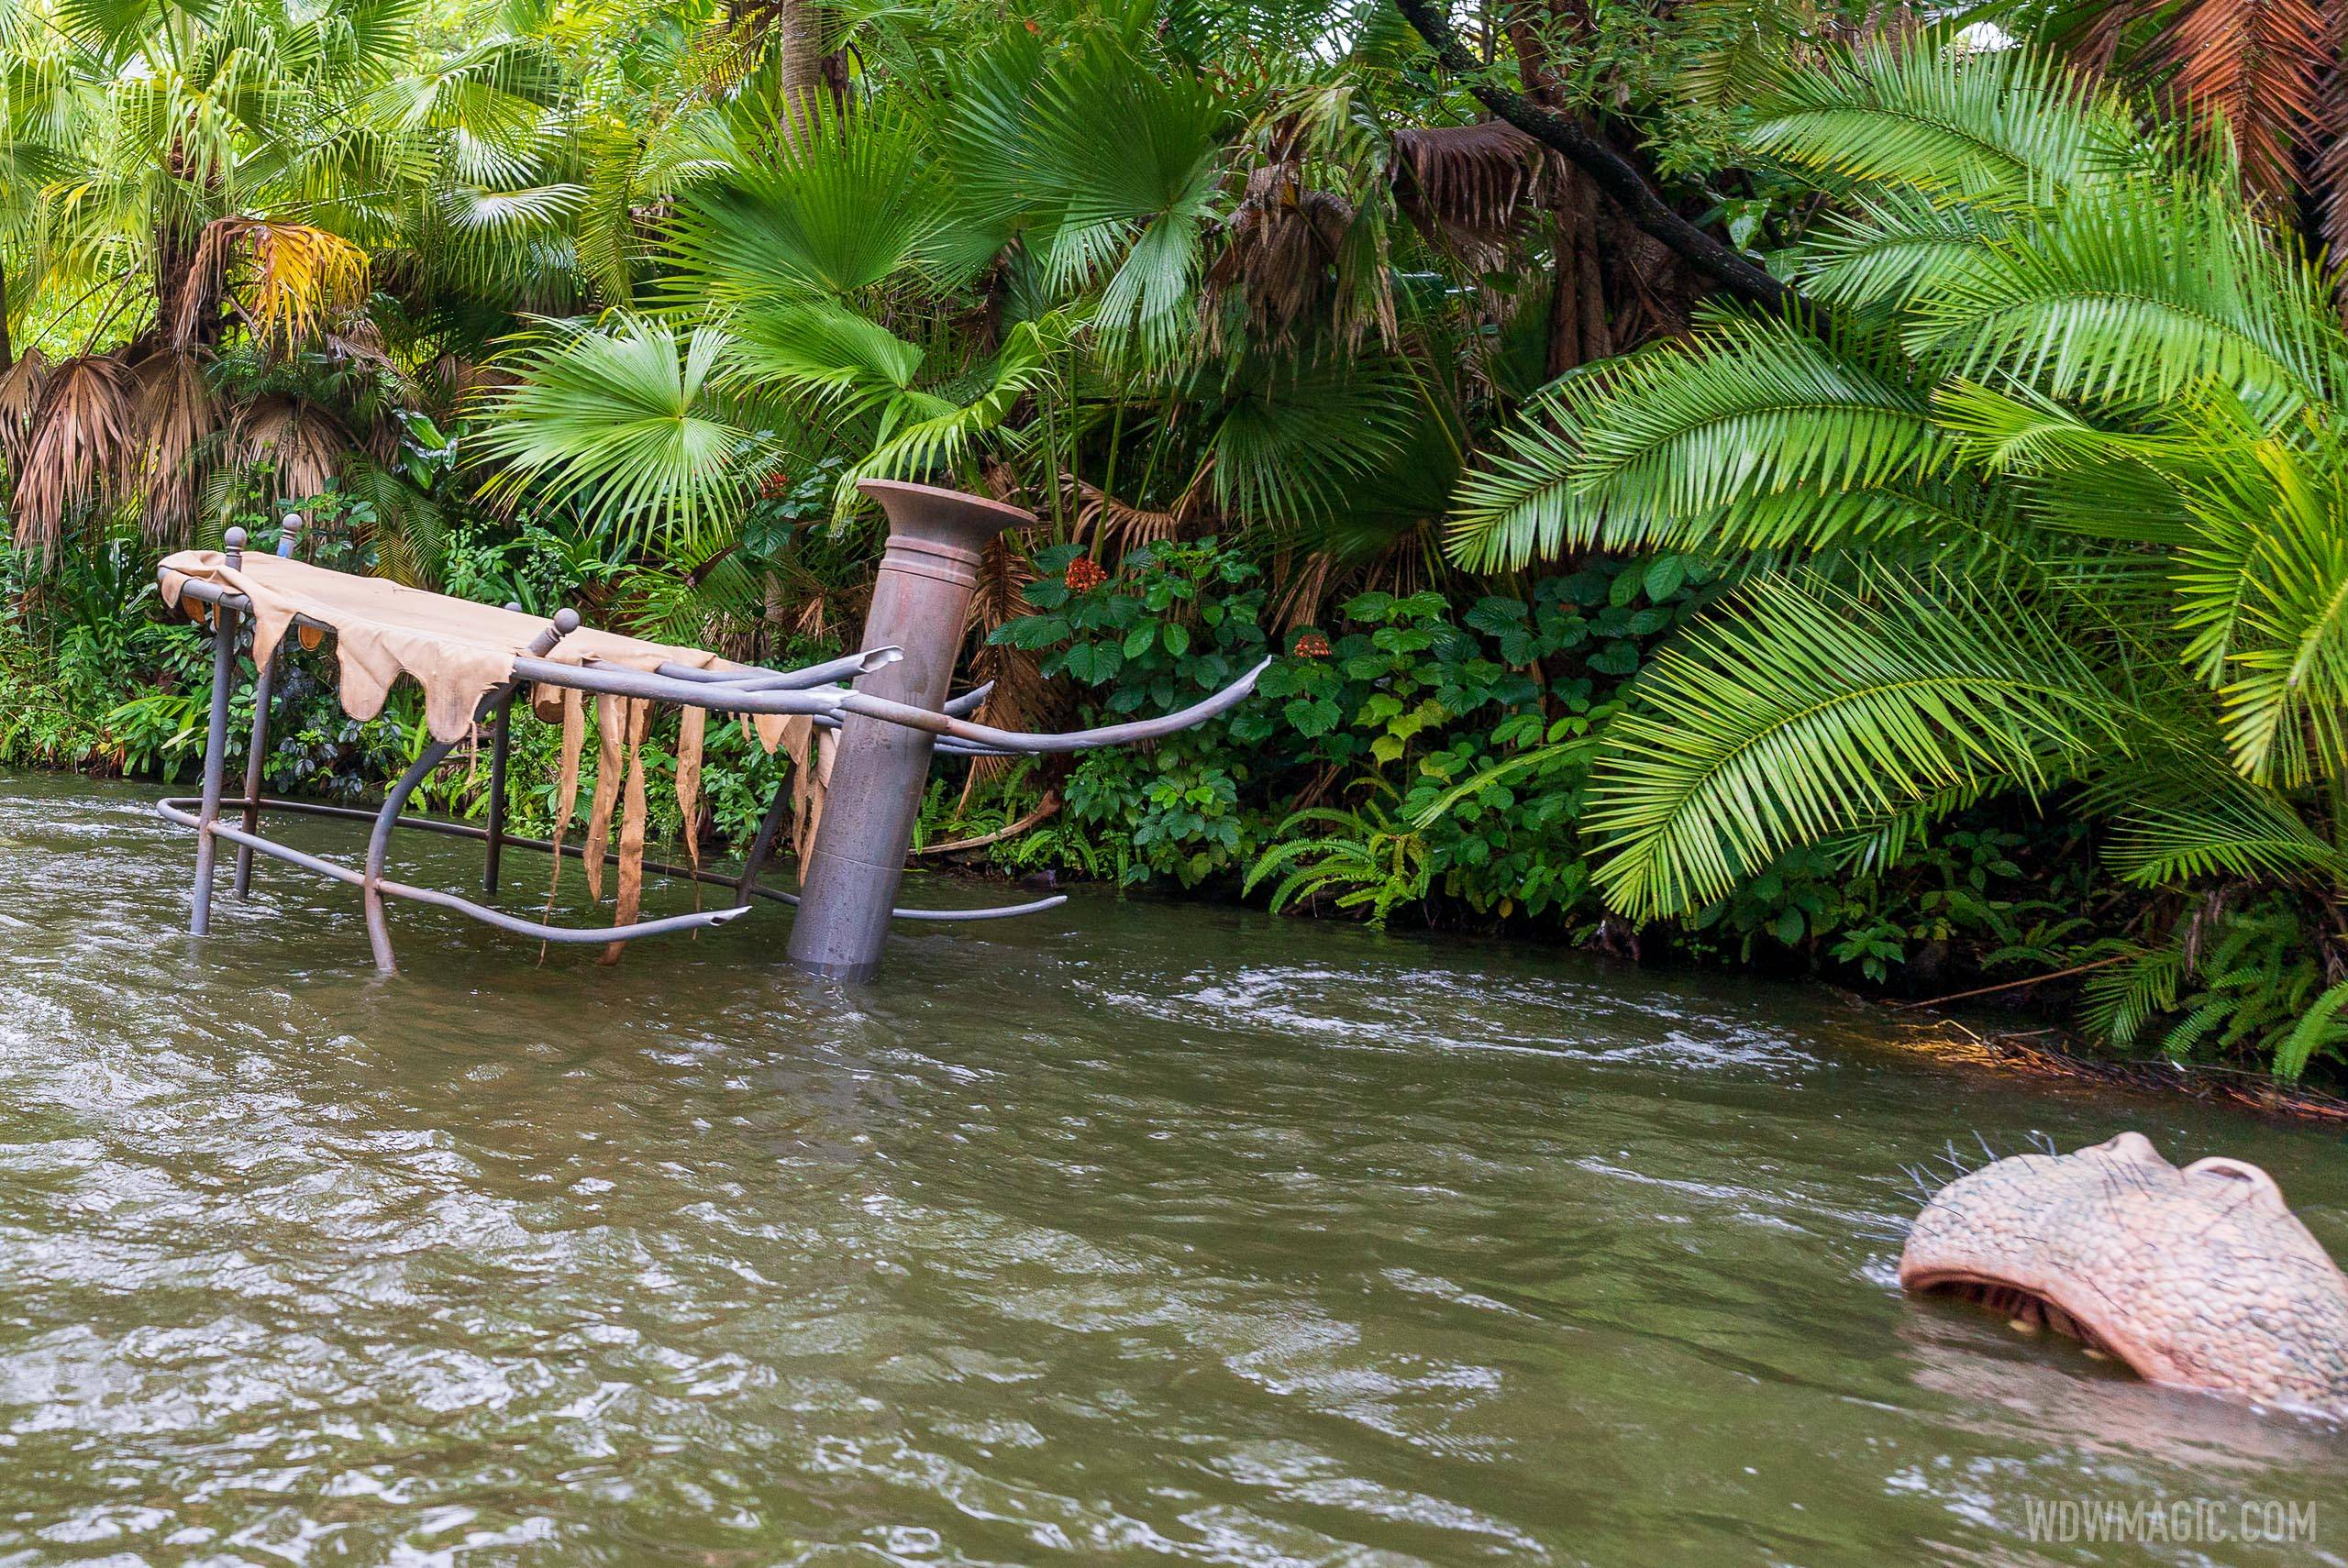 New sunken boat added to the Hippo scene at Disney World's Jungle Cruise